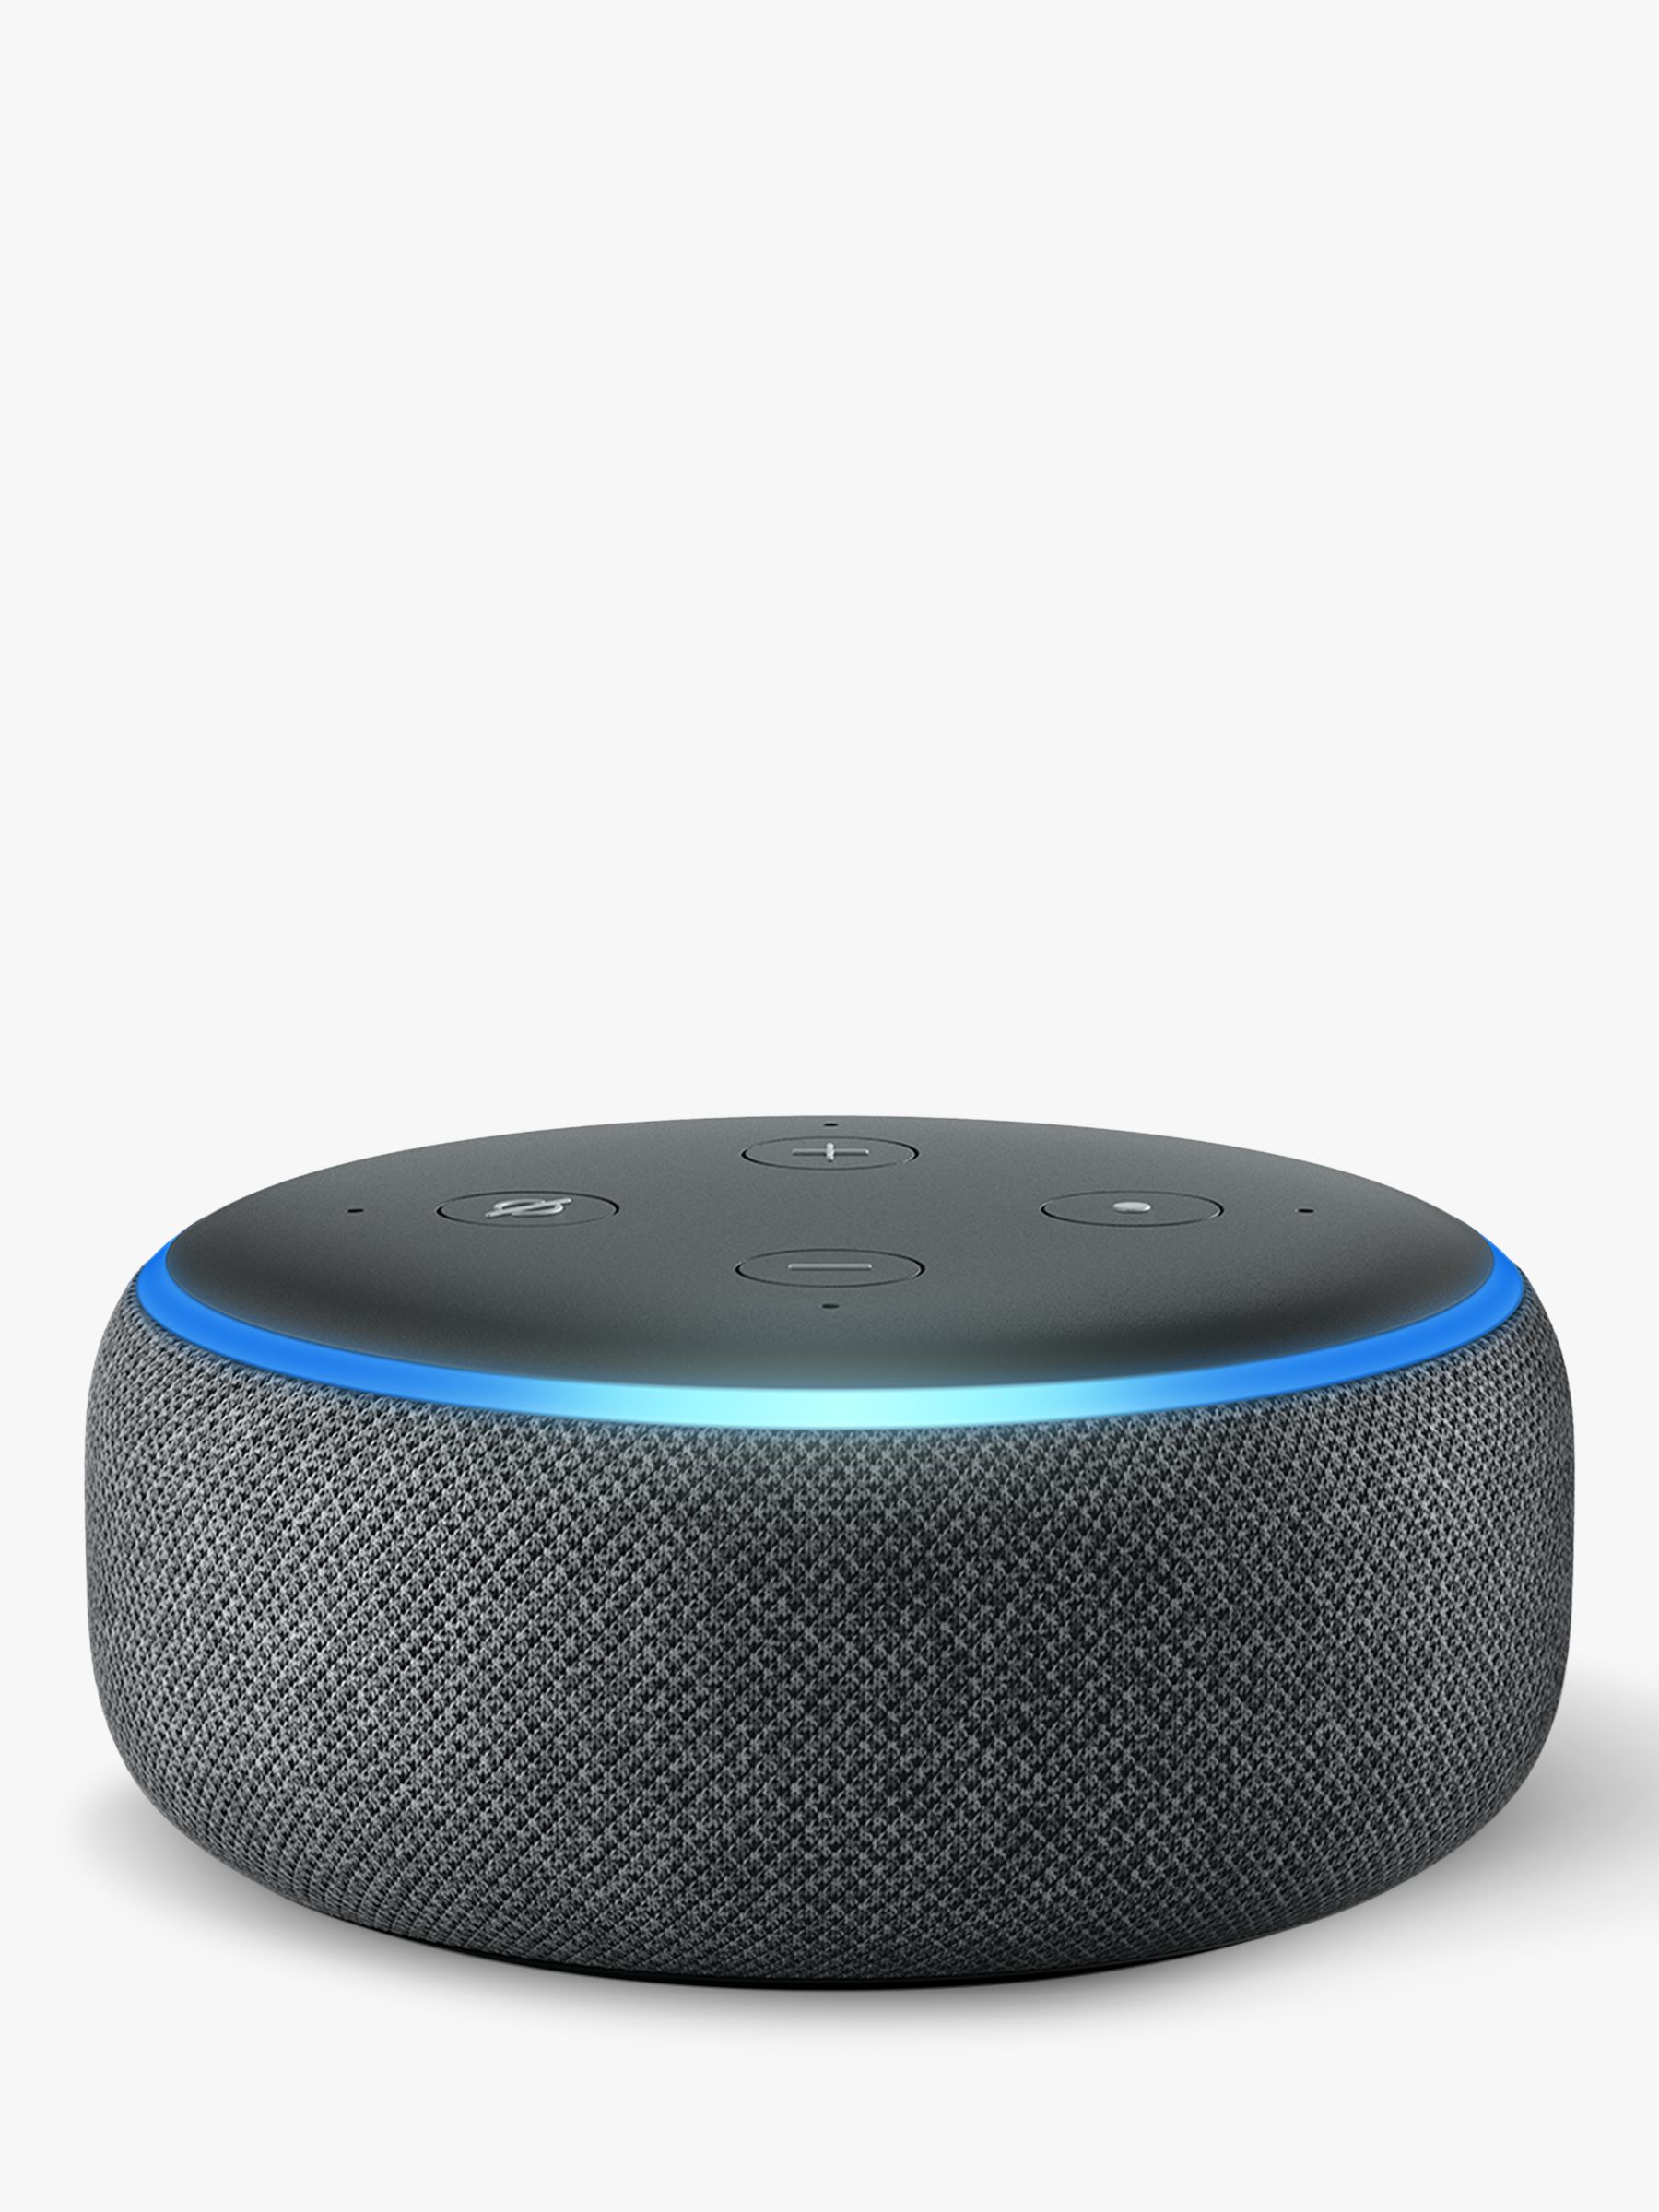 Amazon Echo Dot Smart Device with Alexa 